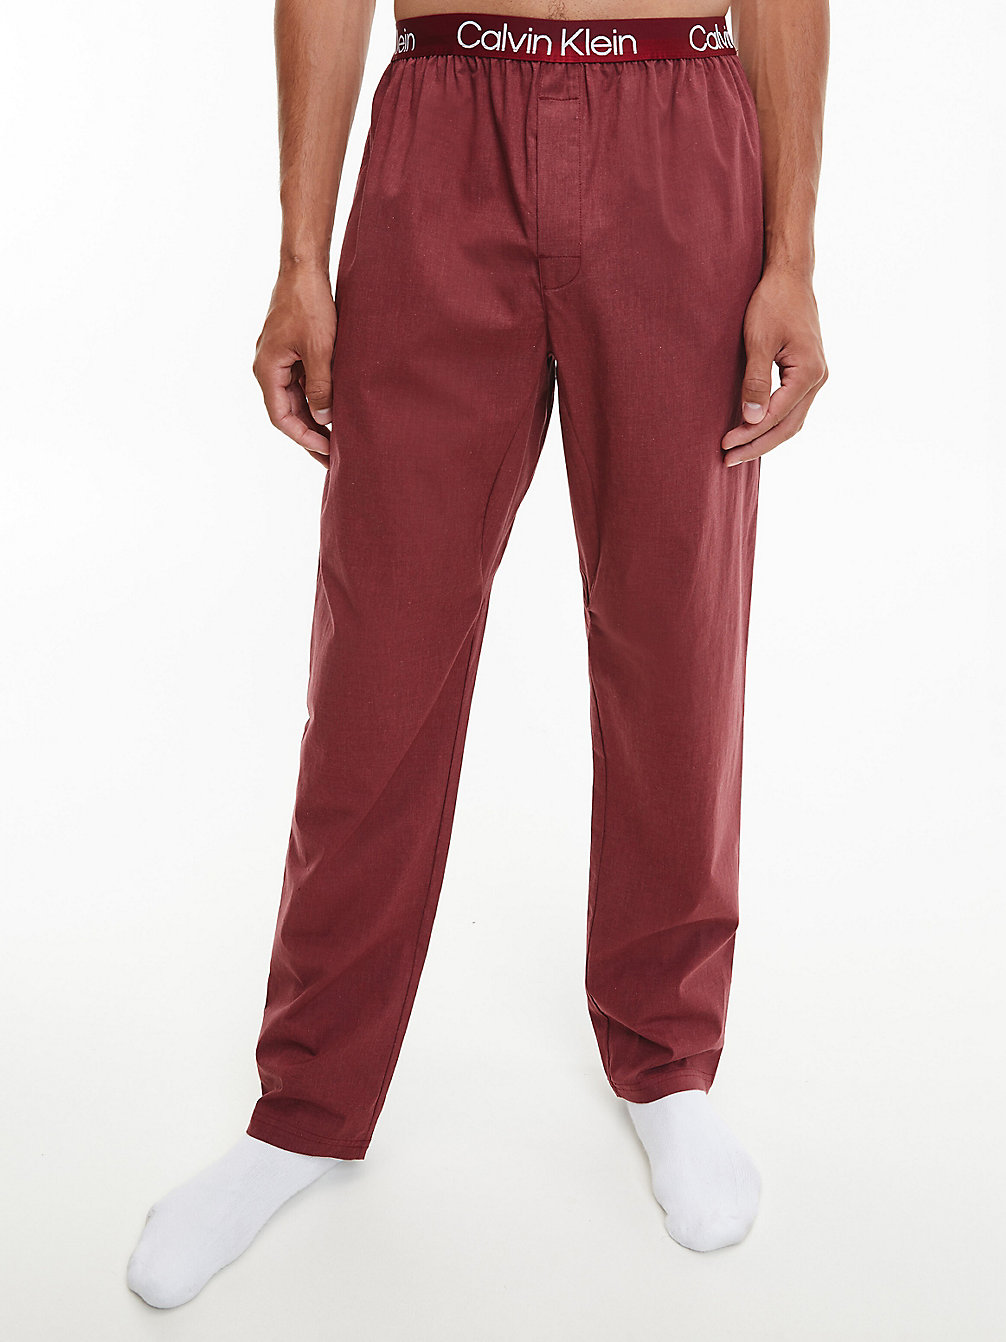 Pantalón De Pijama - Modern Structure > RED CARPET HEATHER > undefined mujer > Calvin Klein